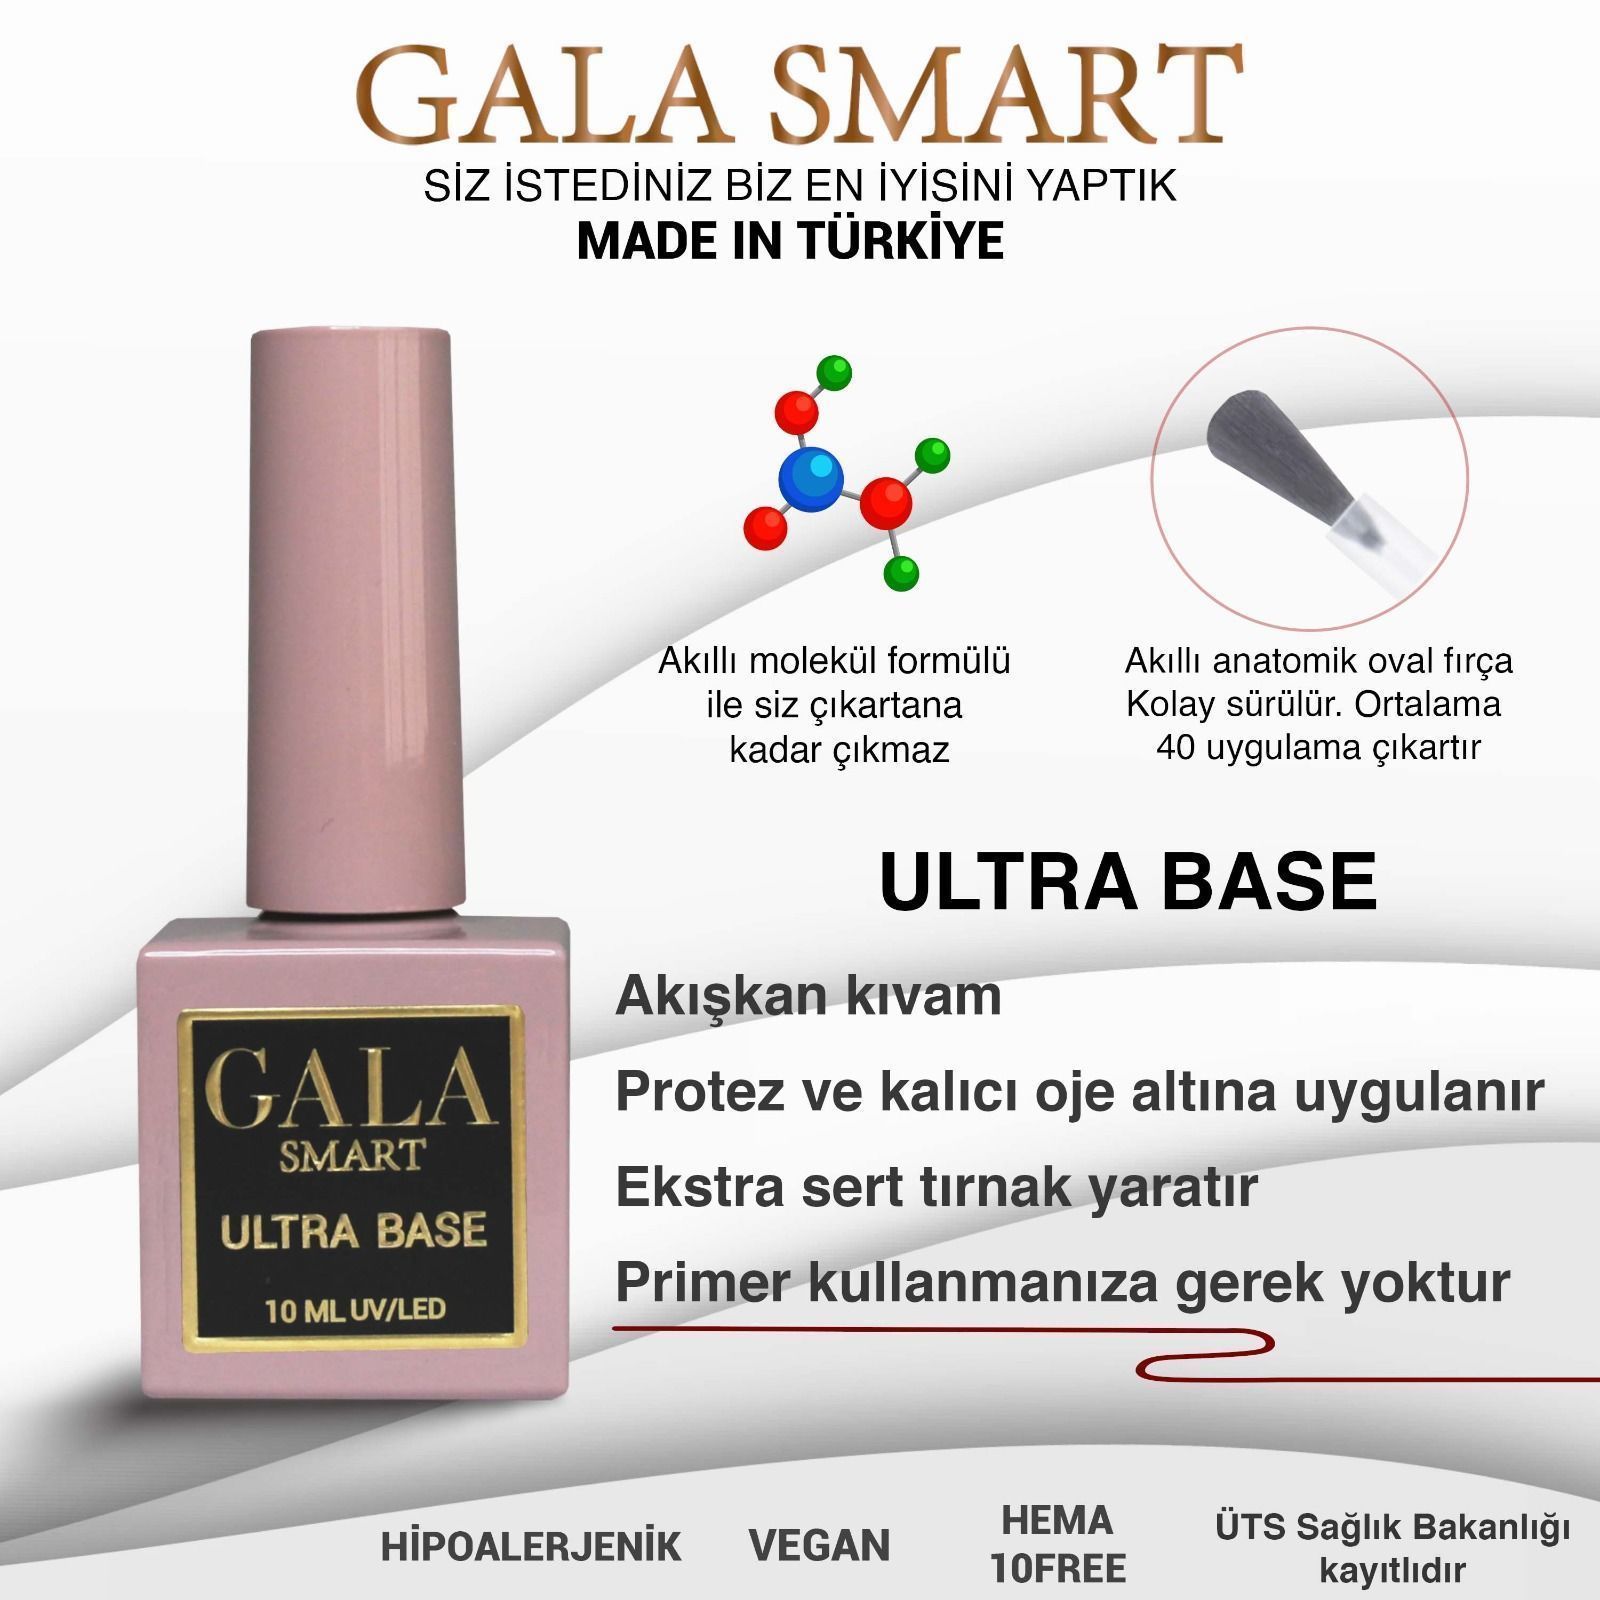 GALA SMART ULTRA BASE 10 mle